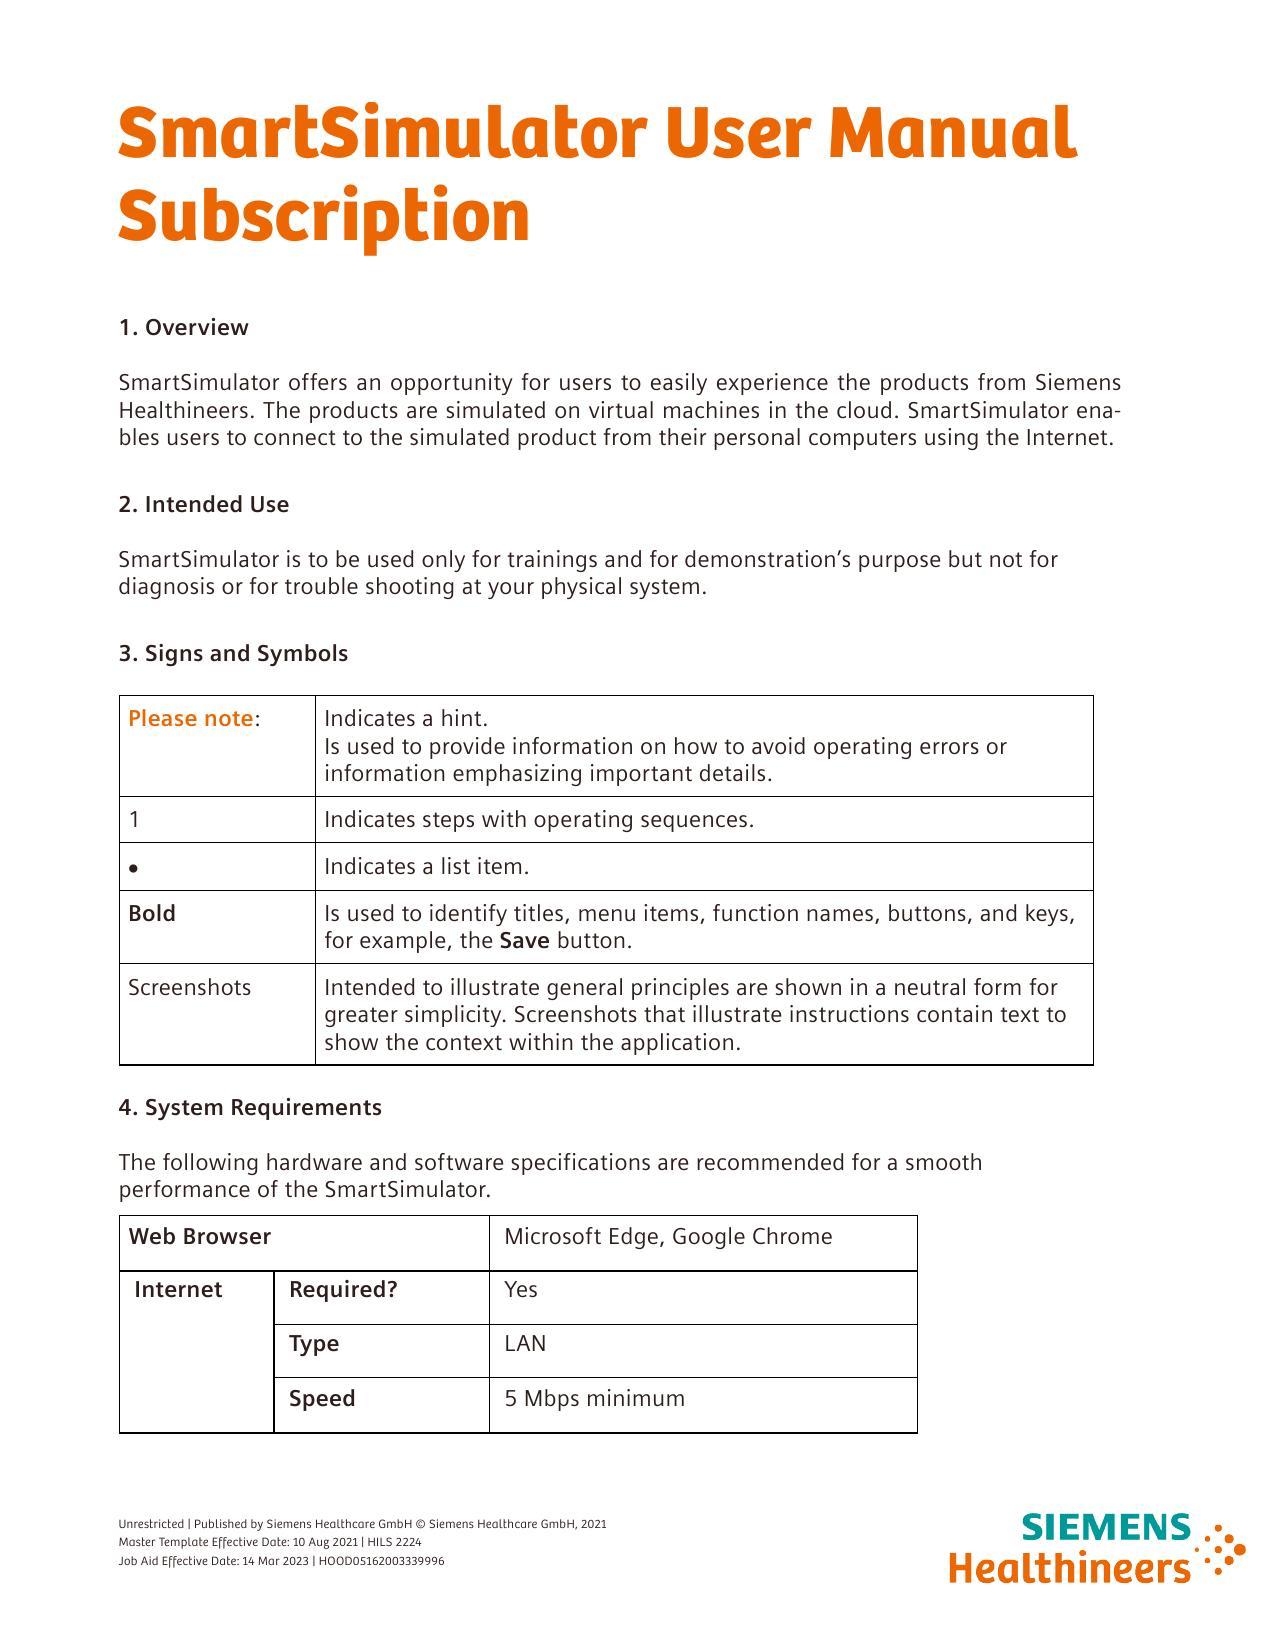 smartsimulator-user-manual-subscription.pdf